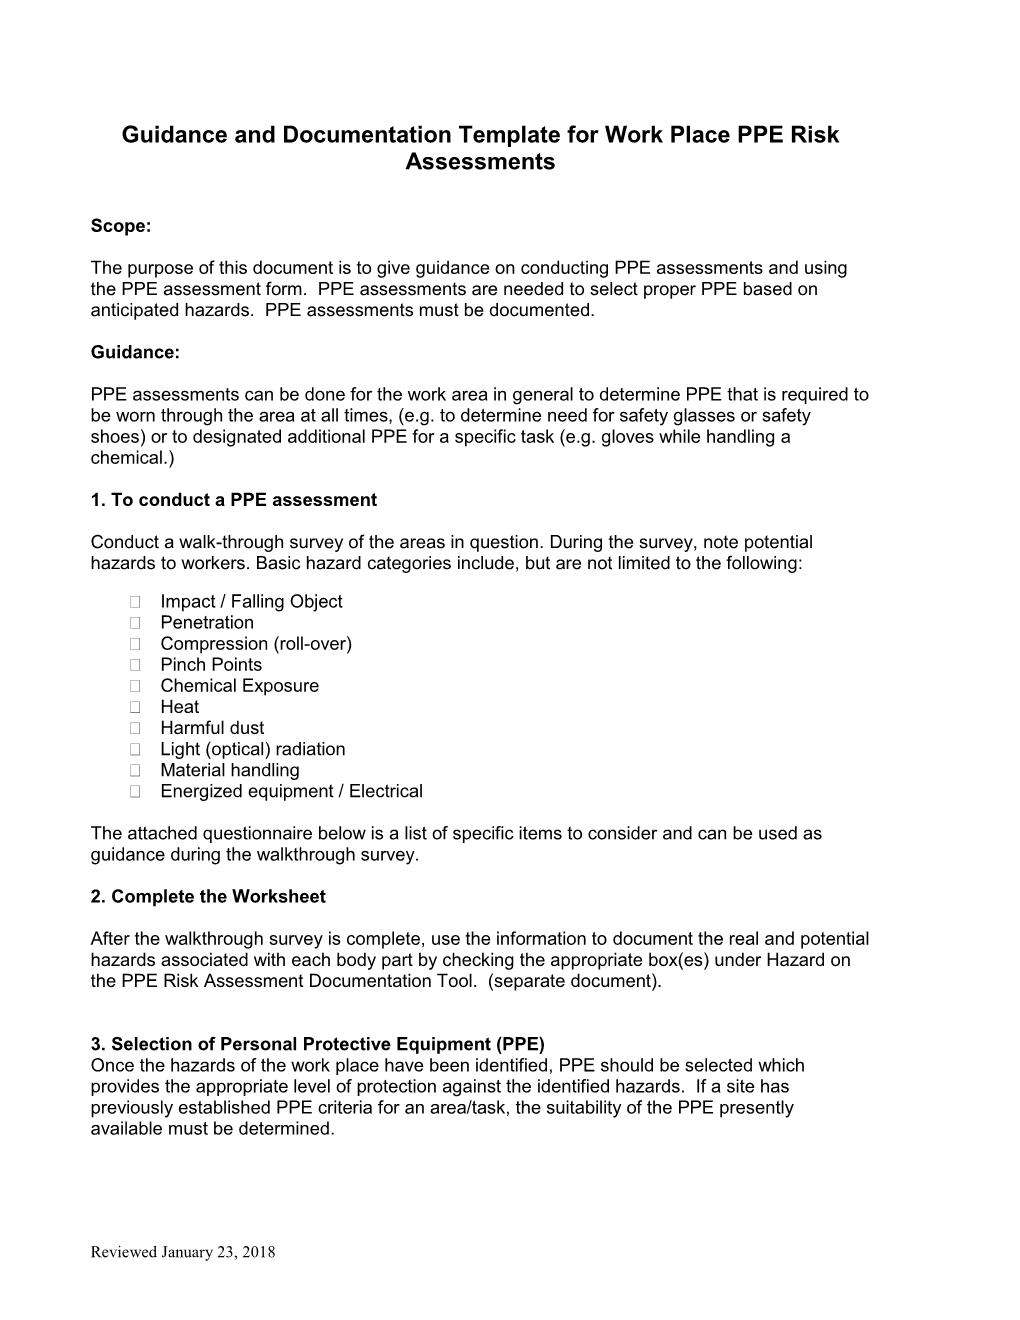 PPE Hazard Assessment Documentation Tool